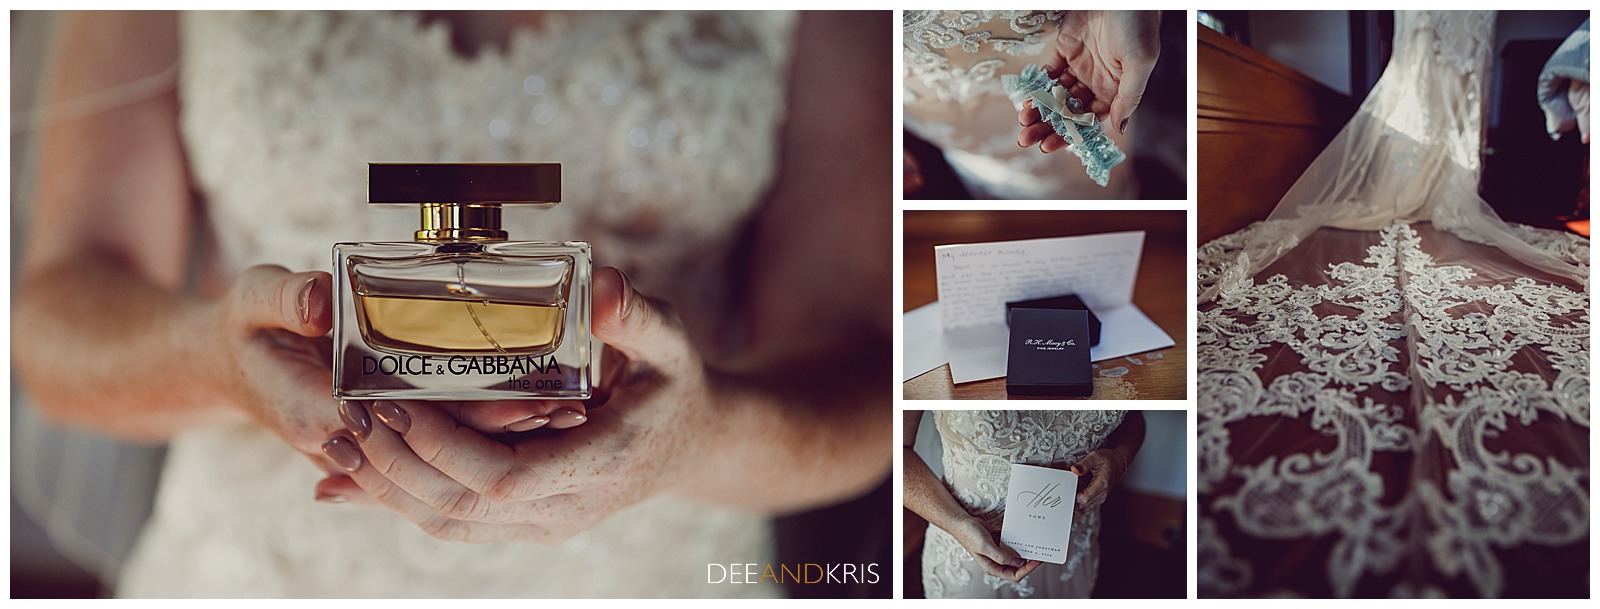 Dolce and Gabbana wedding perfume, bridal wedding details